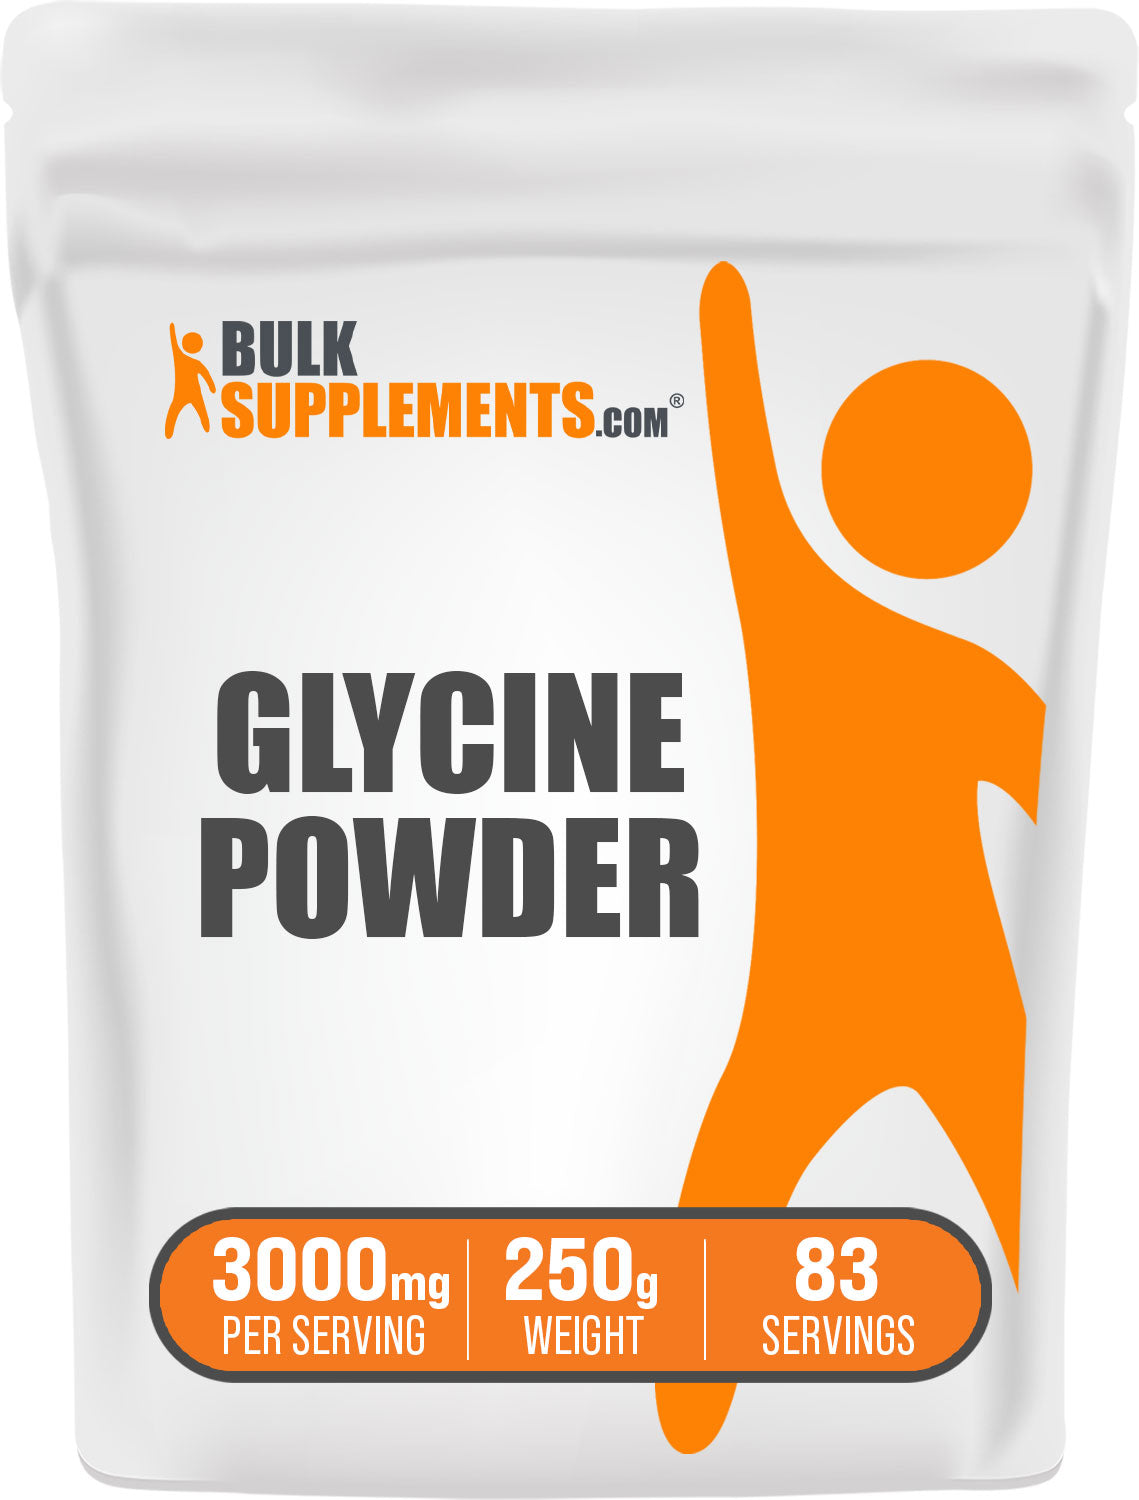 Glycine Powder 250g